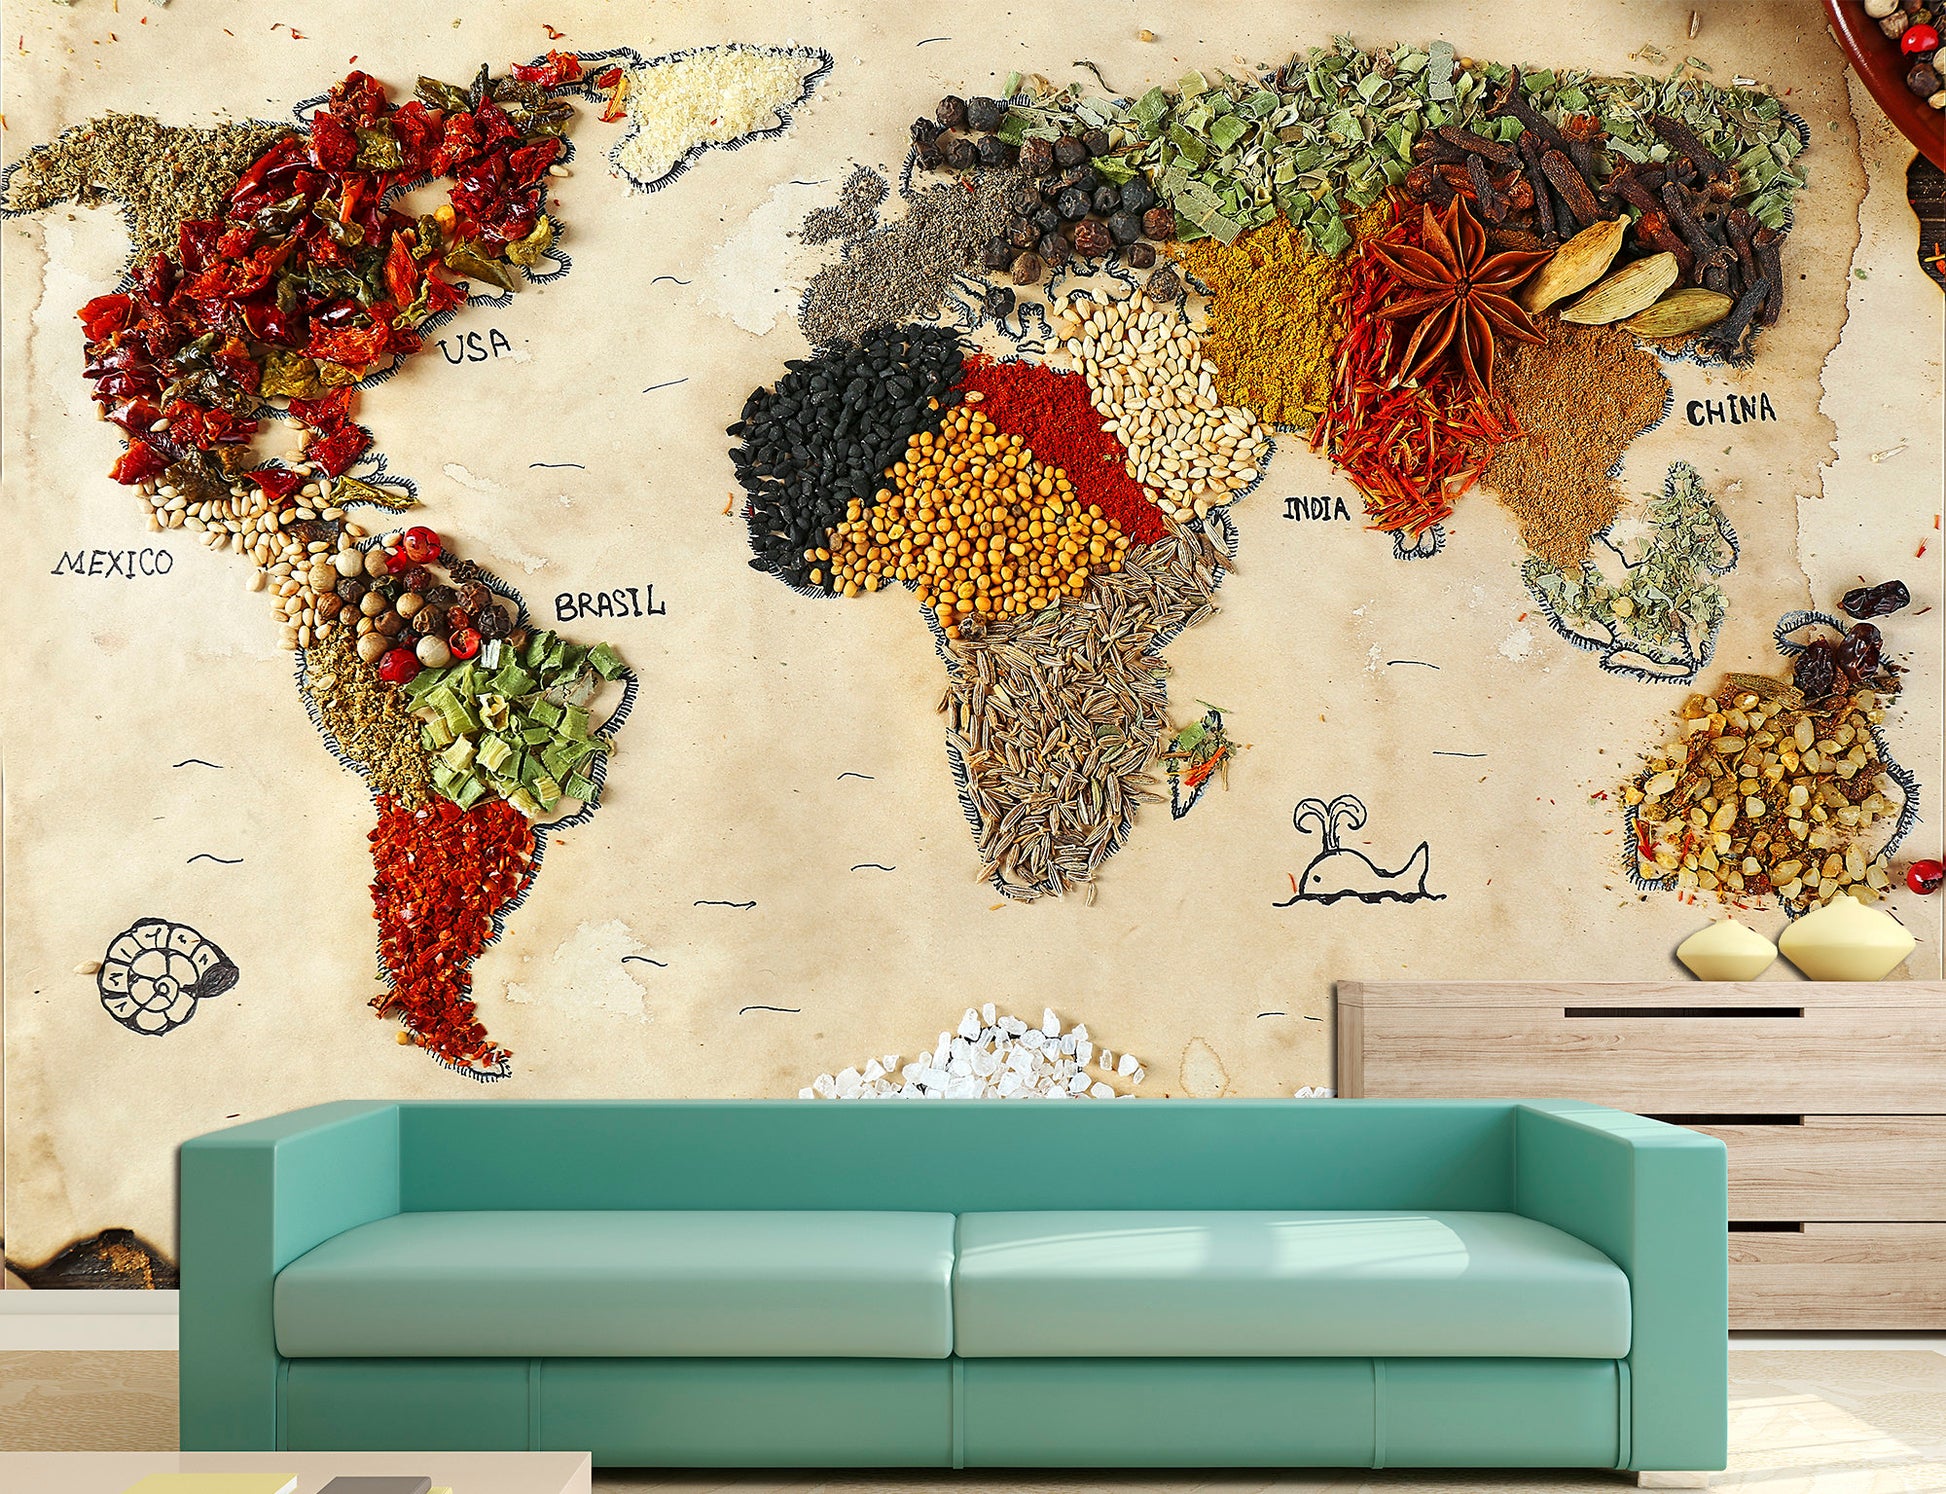 World map wallpaper Spices wall decor Wallpaper mural, World map wall art Spices wall art Adhesive wallpaper